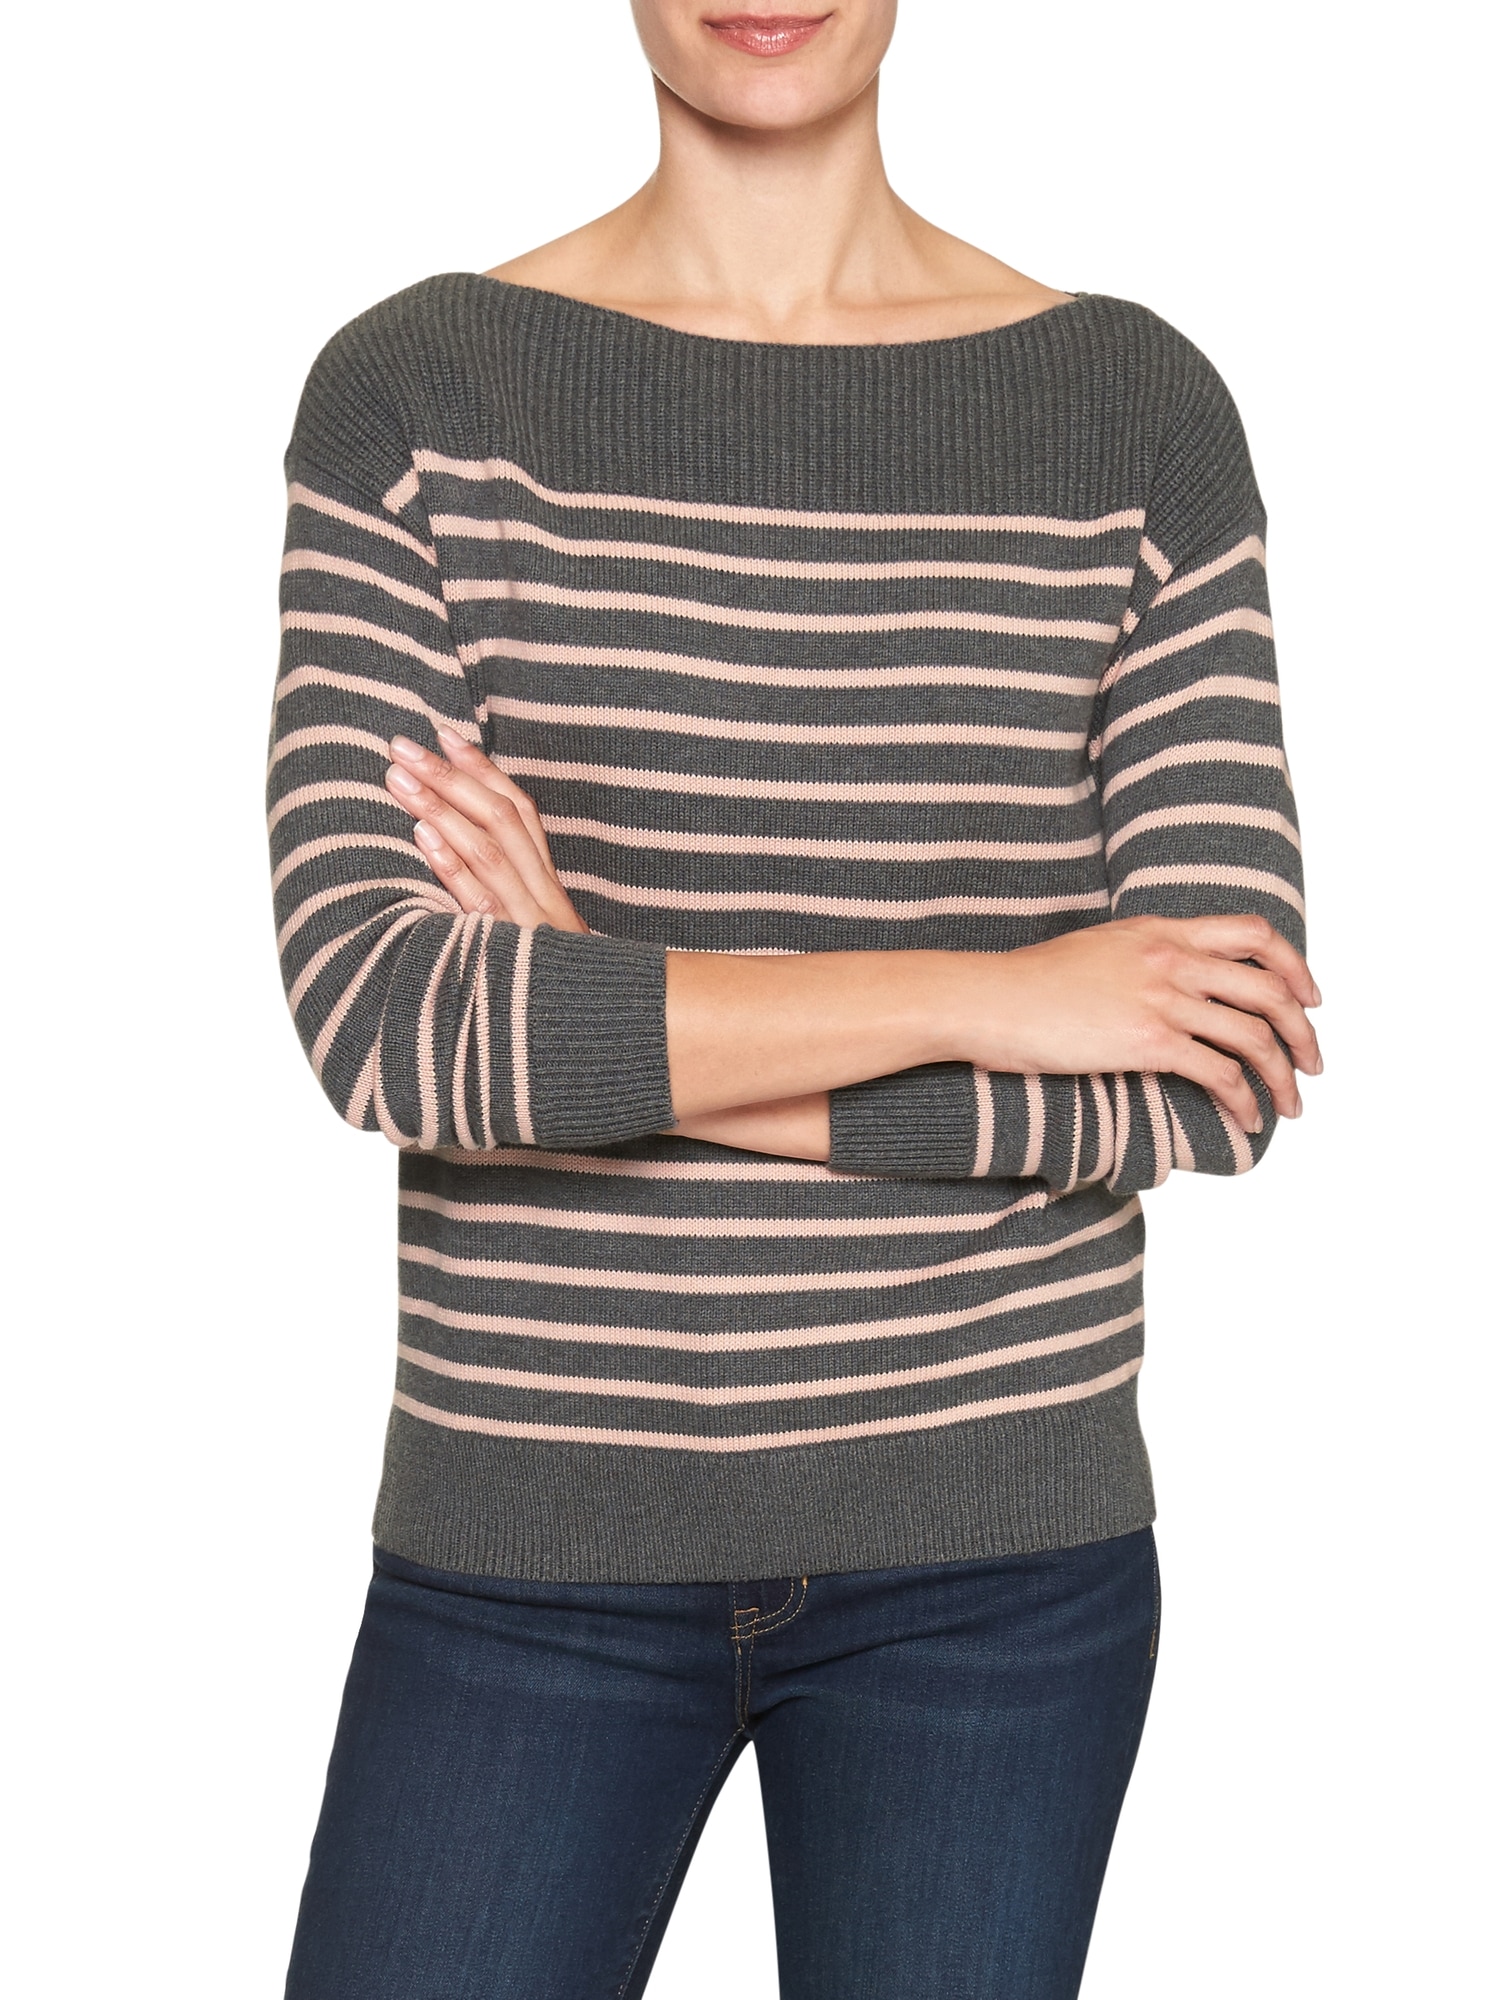 Stripe boatneck sweater | Gap Factory